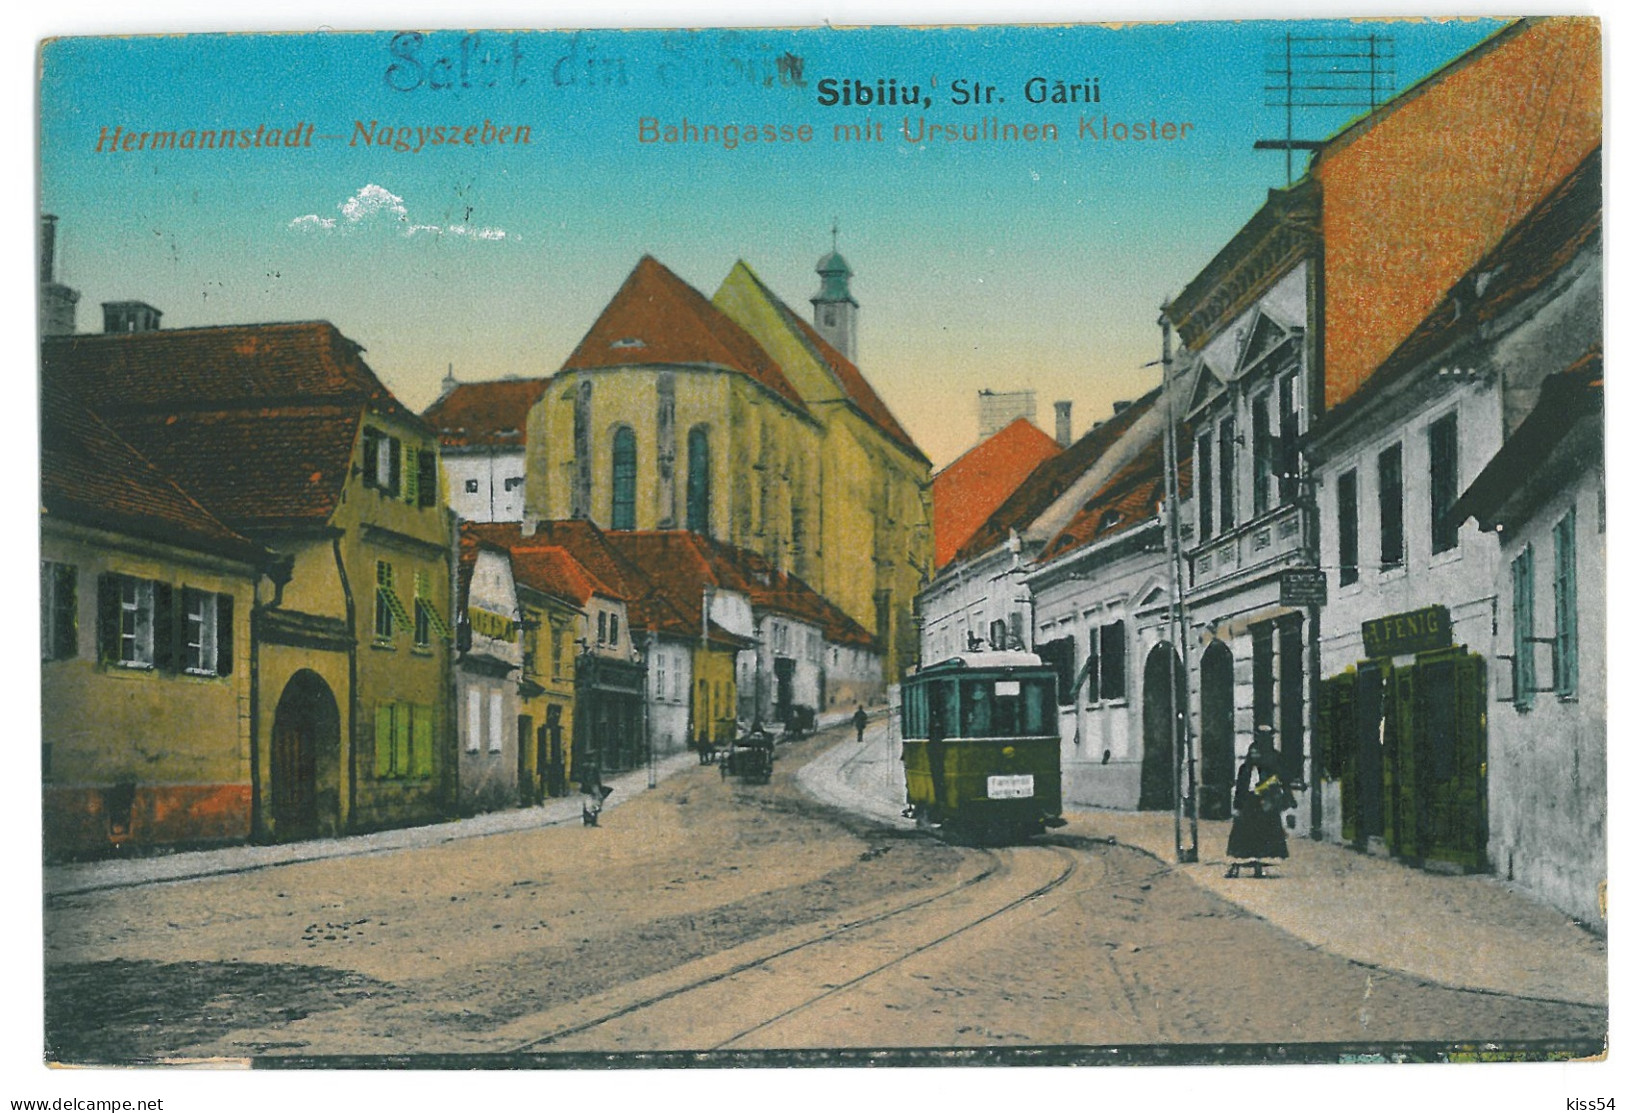 RO 09 - 22407 SIBIU, Tramway, Romania - Old Postcard - Used - 1926 - Roumanie